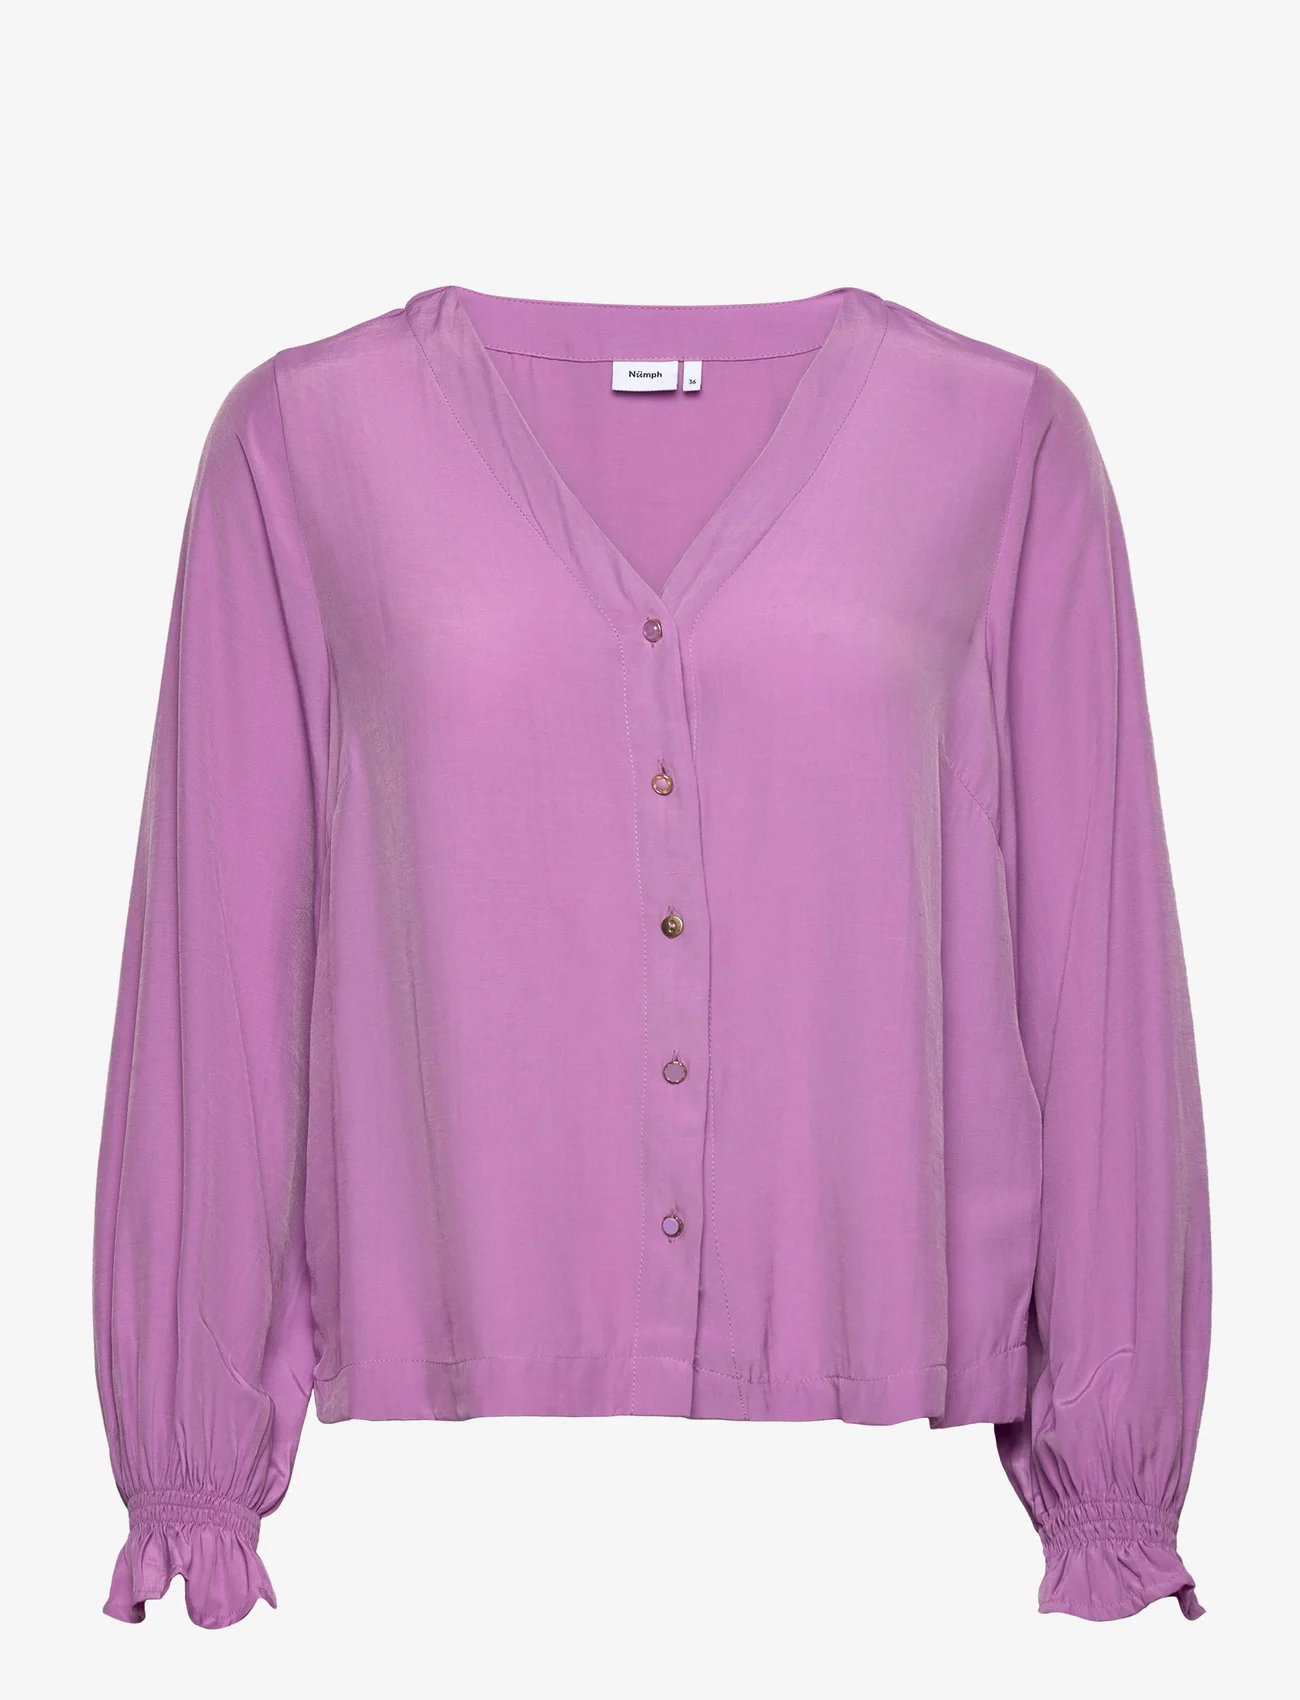 Nümph - NUYVETTE SHIRT - marškiniai ilgomis rankovėmis - african violet - 0